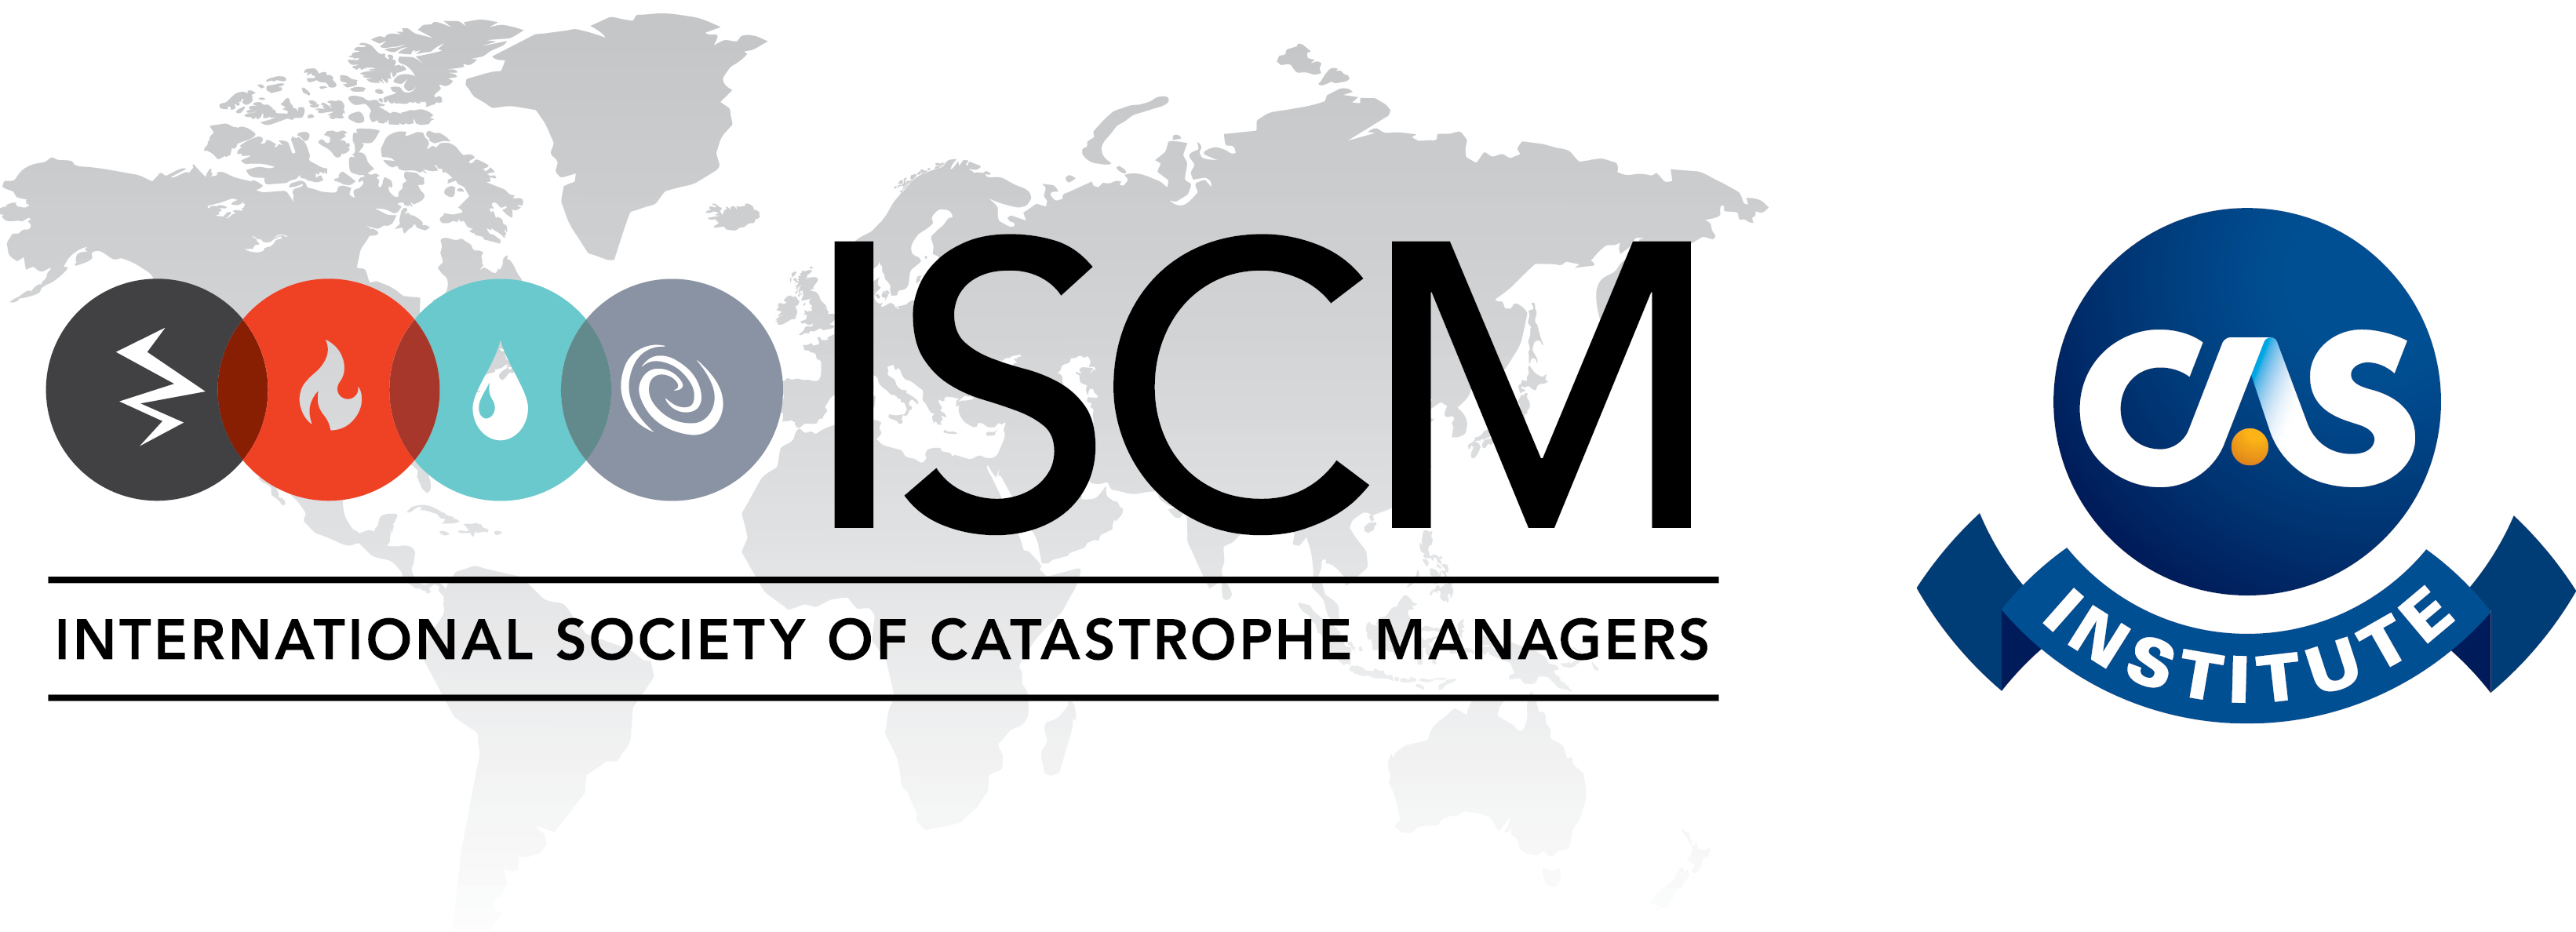 ISCM-iCAS Logo